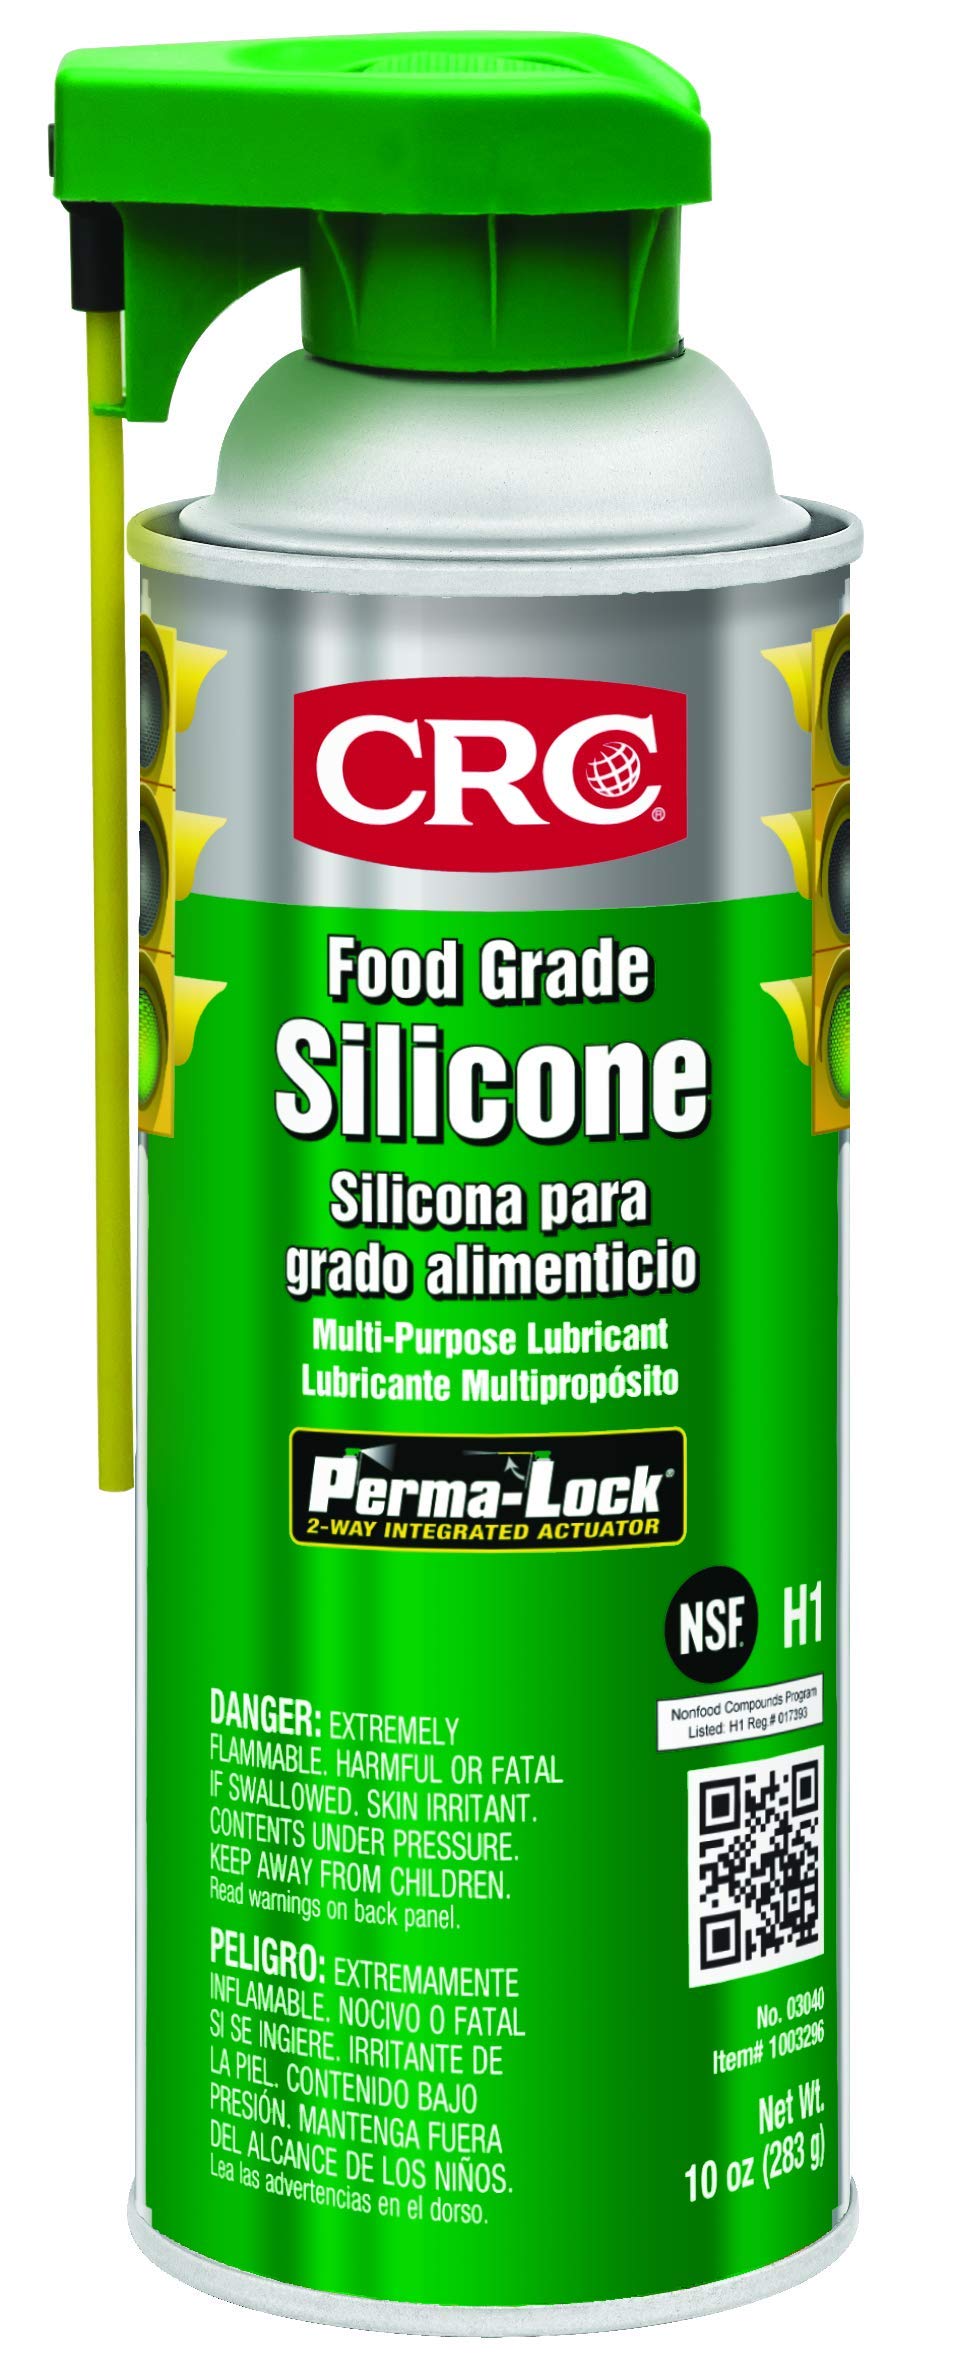 CRC Food Grade Silicone, 10 Wt Oz, Multi-Purpose Silicone Lubricant for High Temperature Applications, NSF H1 Registered Aerosol Spray